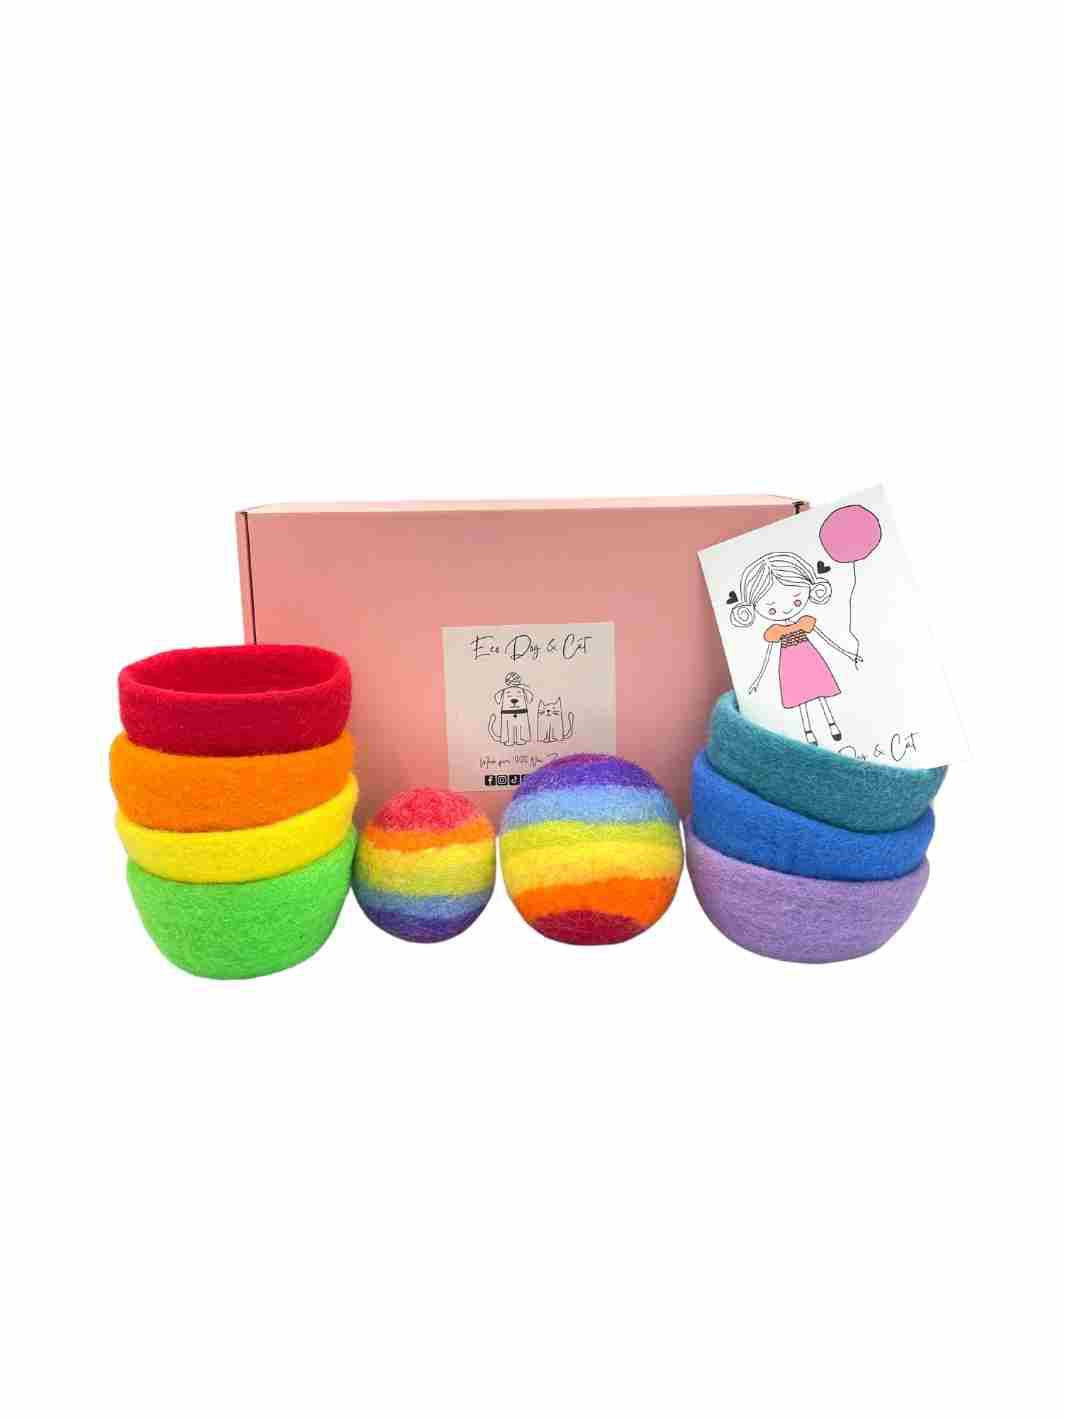 Eco Gift Set | Eco Gift | Gift for Her | Felt Bowls and Balls (Rainbow) - Gift Set | Felt Stacking Bowls | Felt Sensory Balls | Eco Dog & Cat